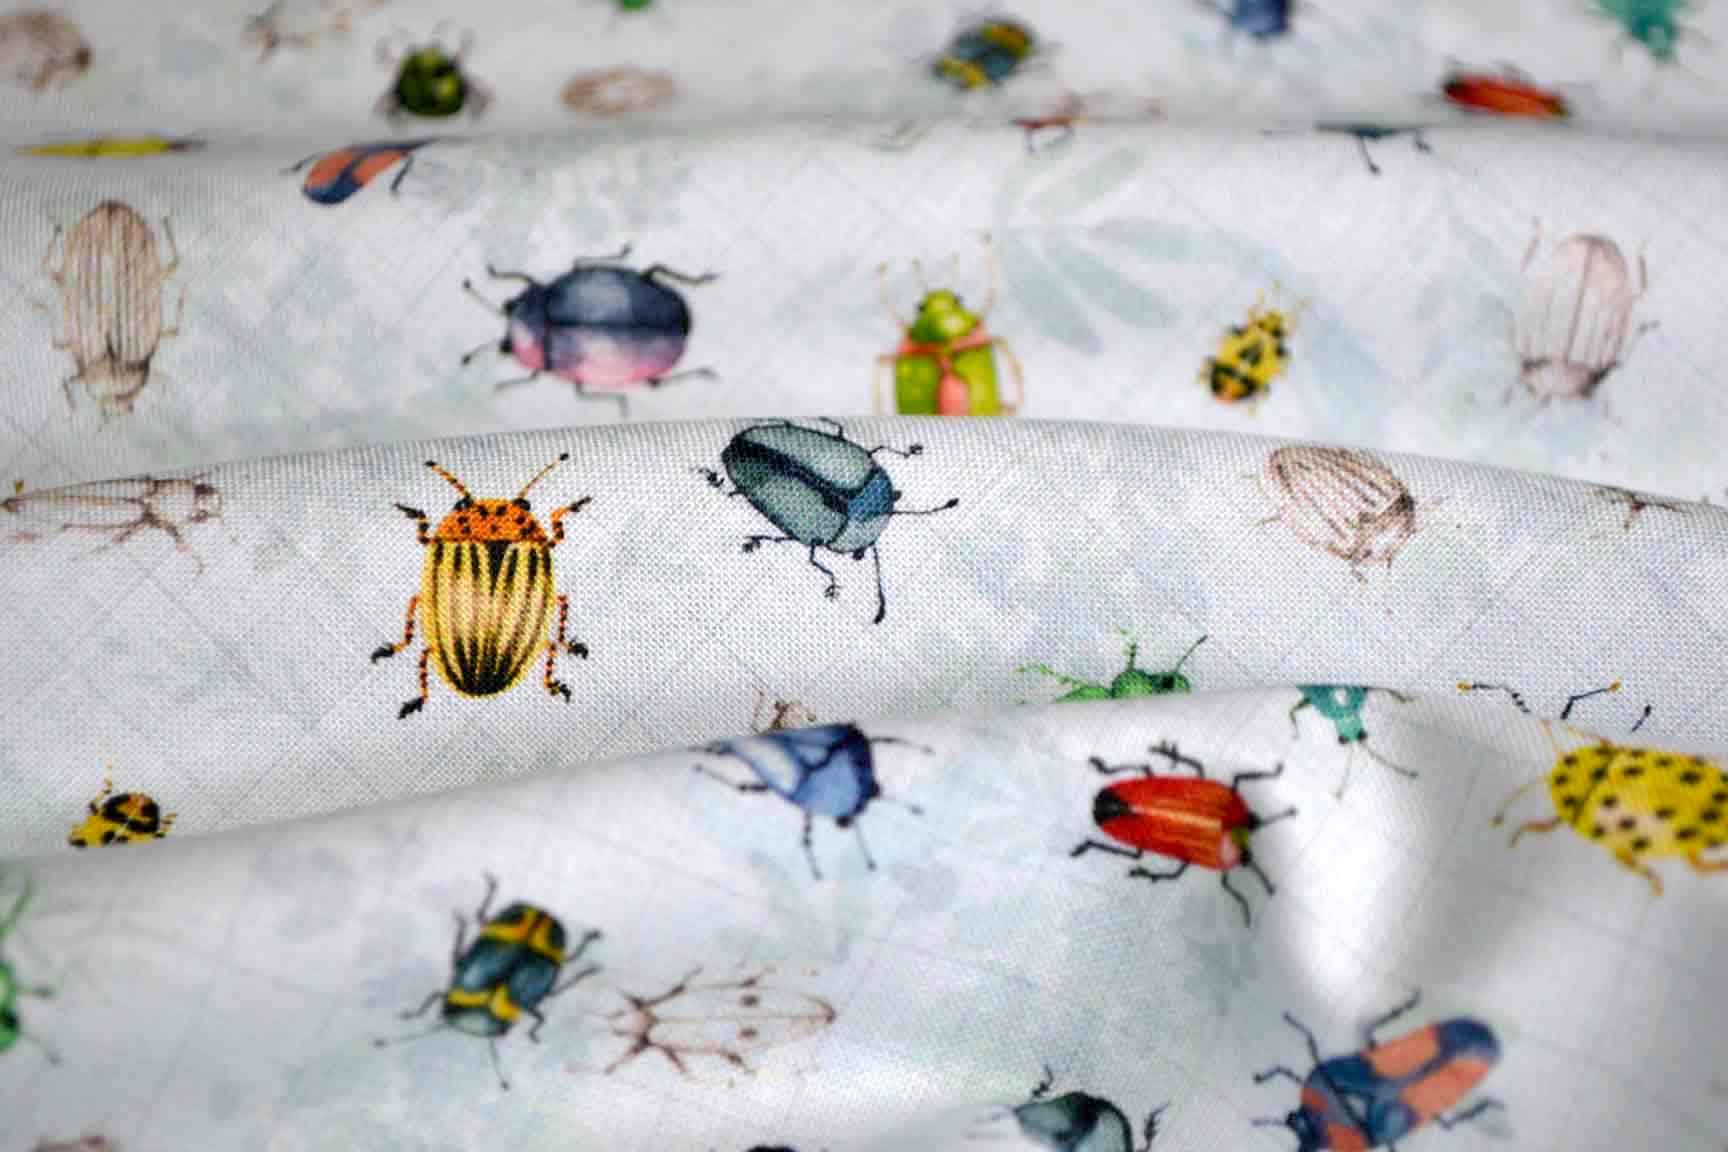 Beetles and Bugs Aqua, Michael Miller